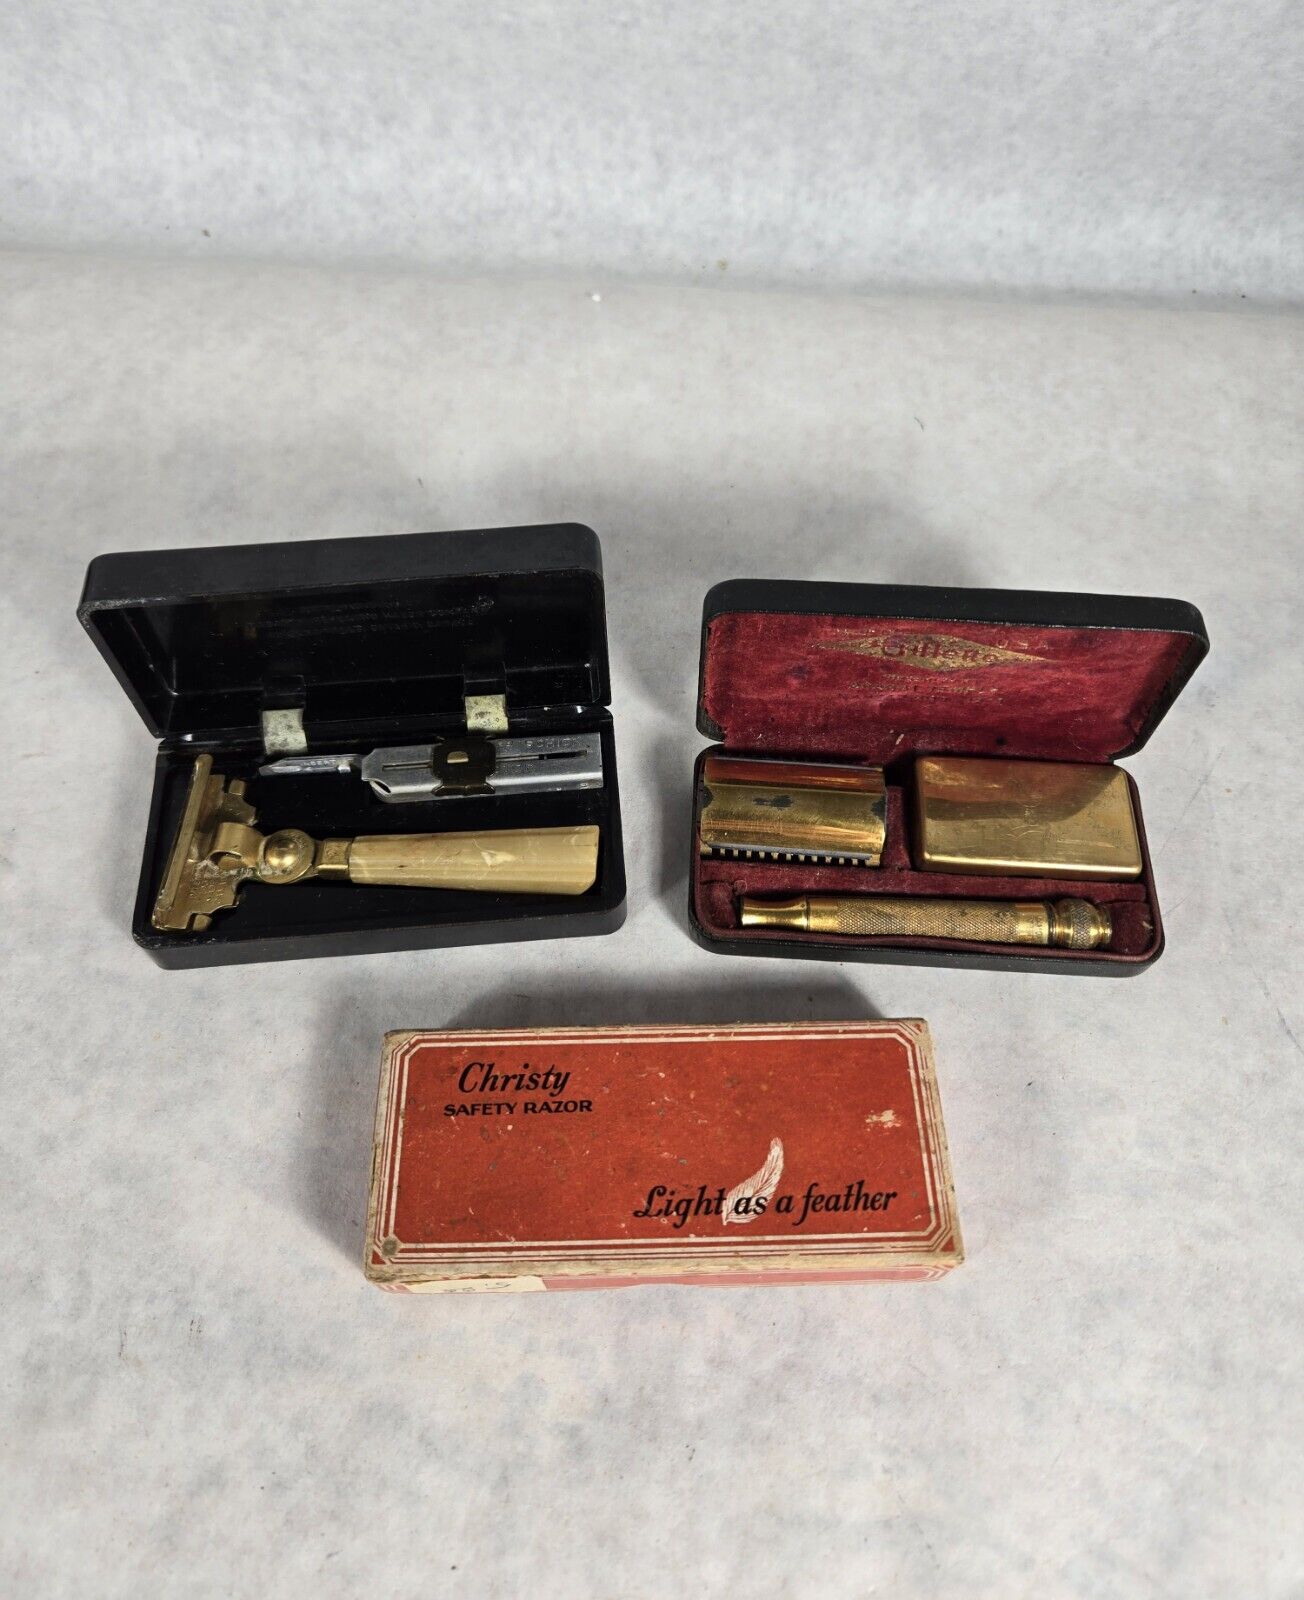 Antique Vintage Razors Lot of 3 Gillette W/Blades - Shick Injector - Christy